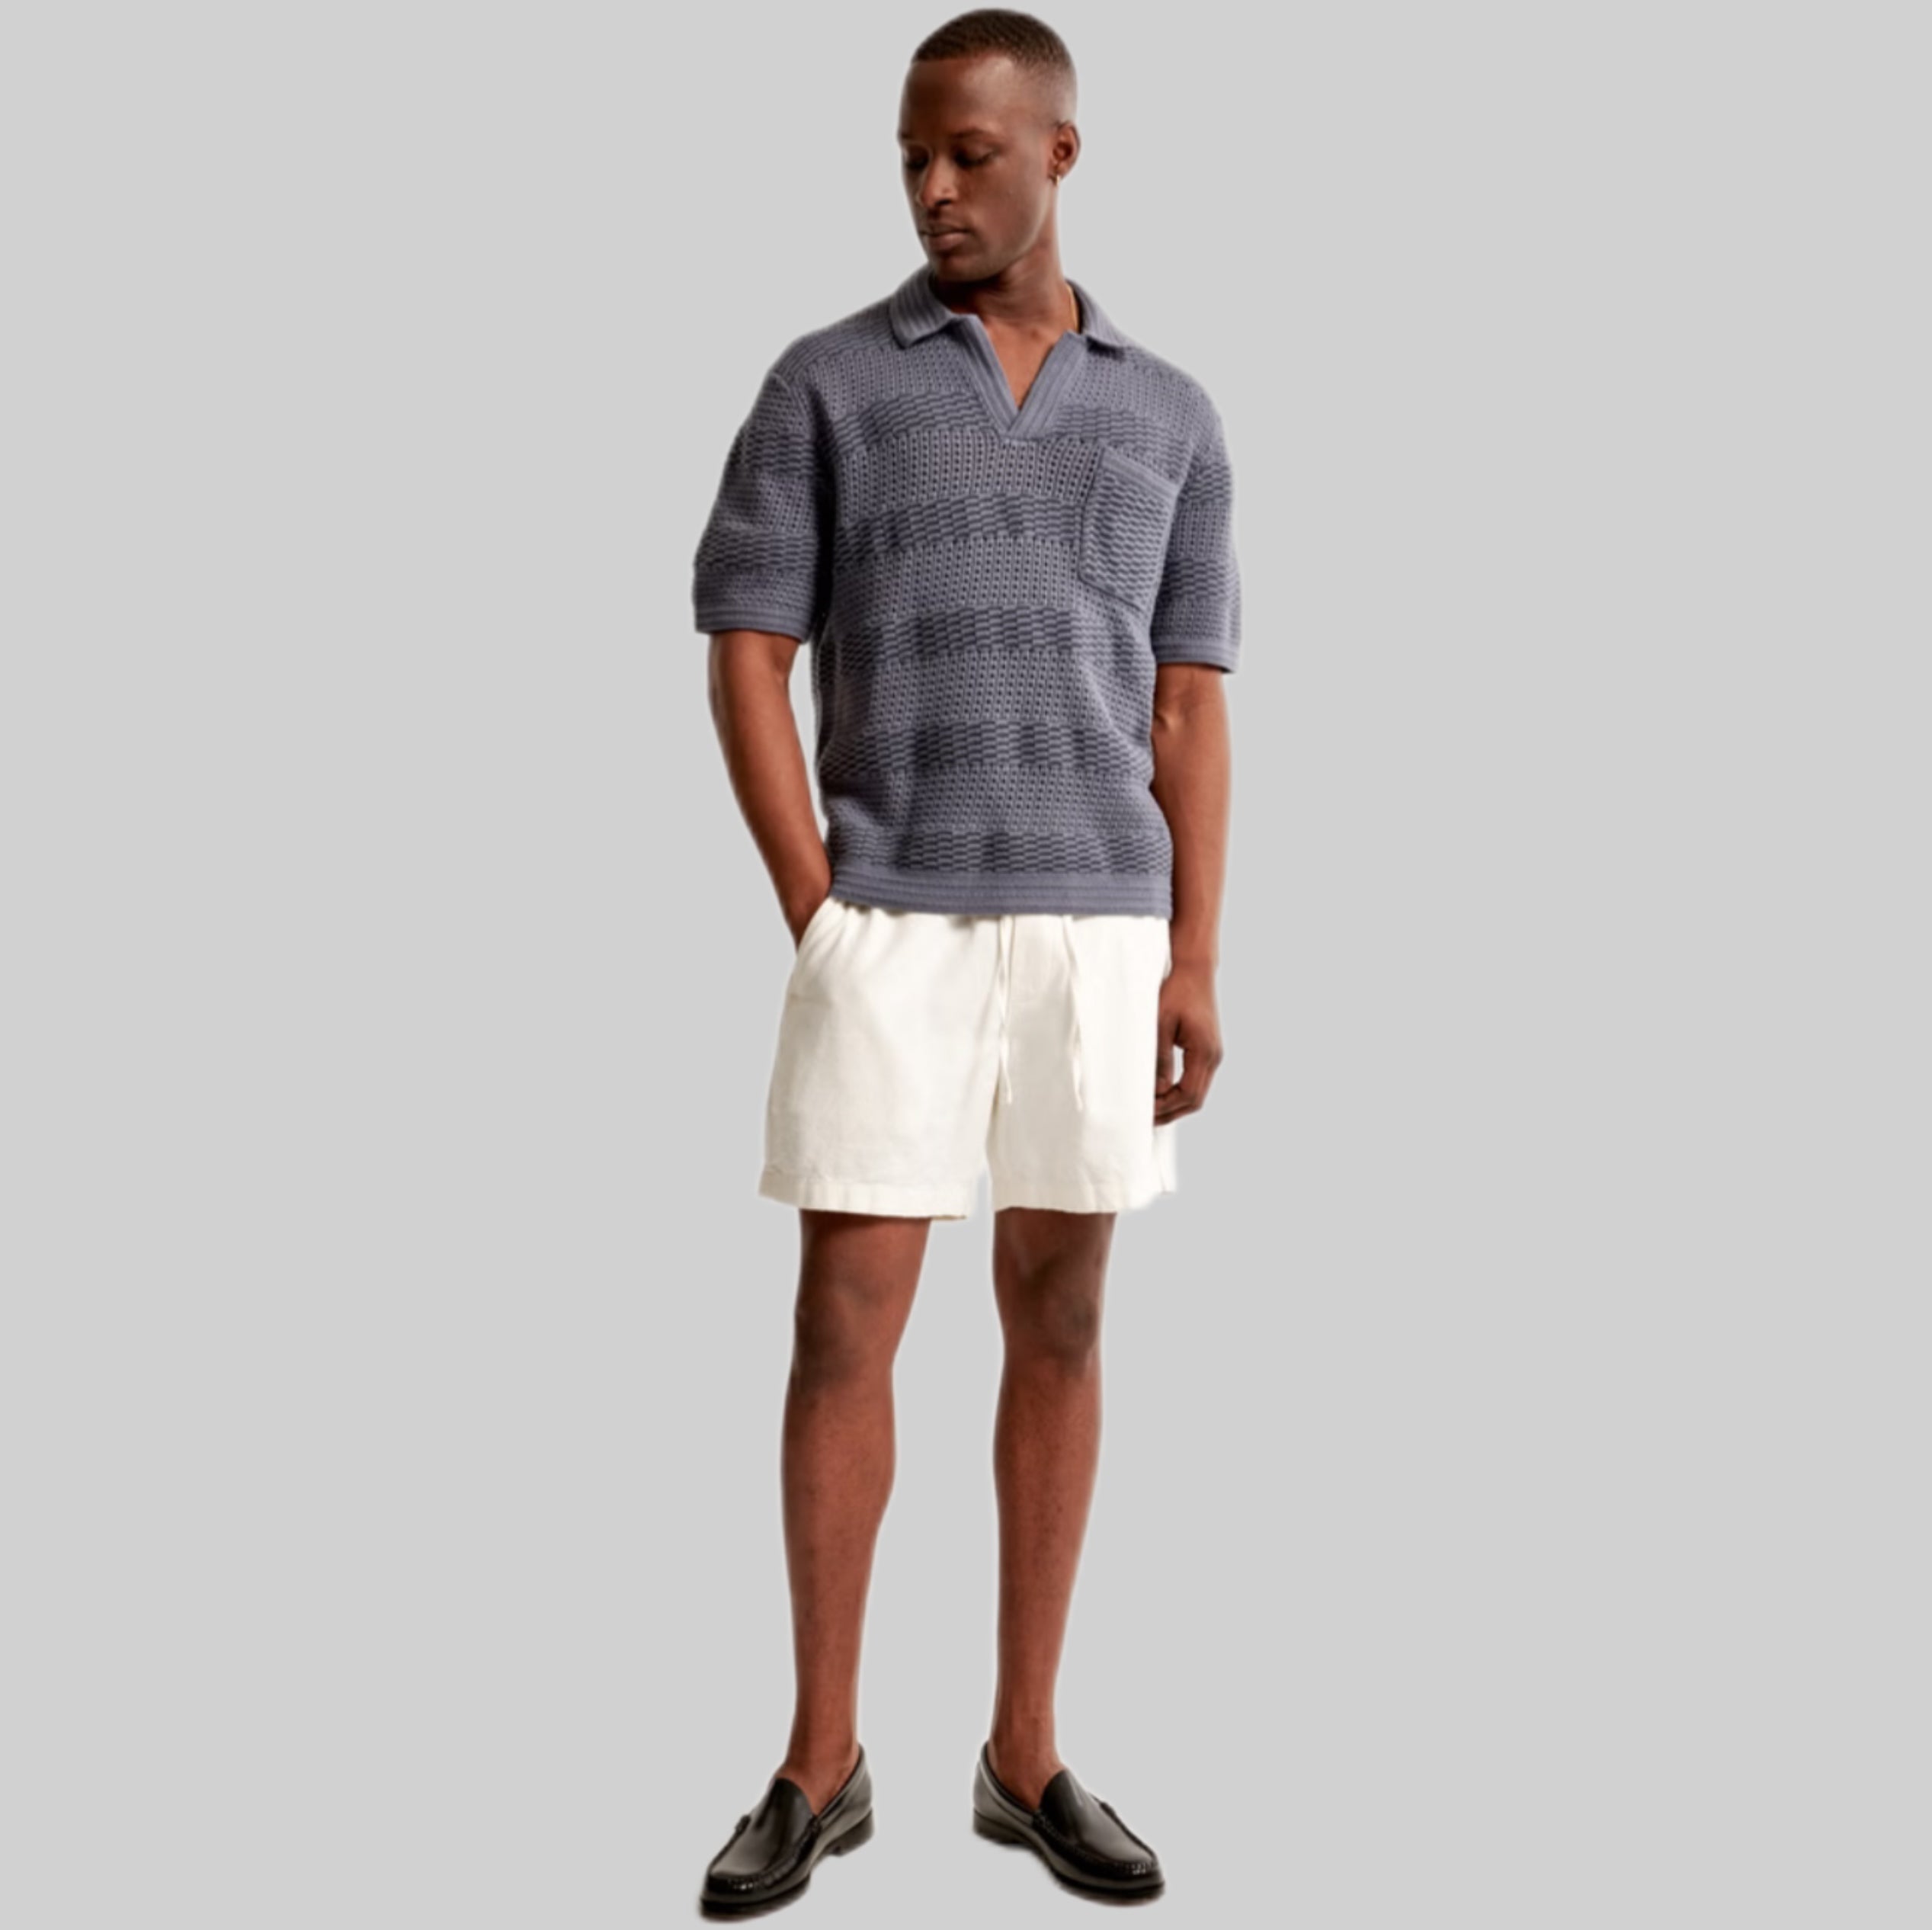 Abercrombie & Fitch shorts, men, frontside, white, model